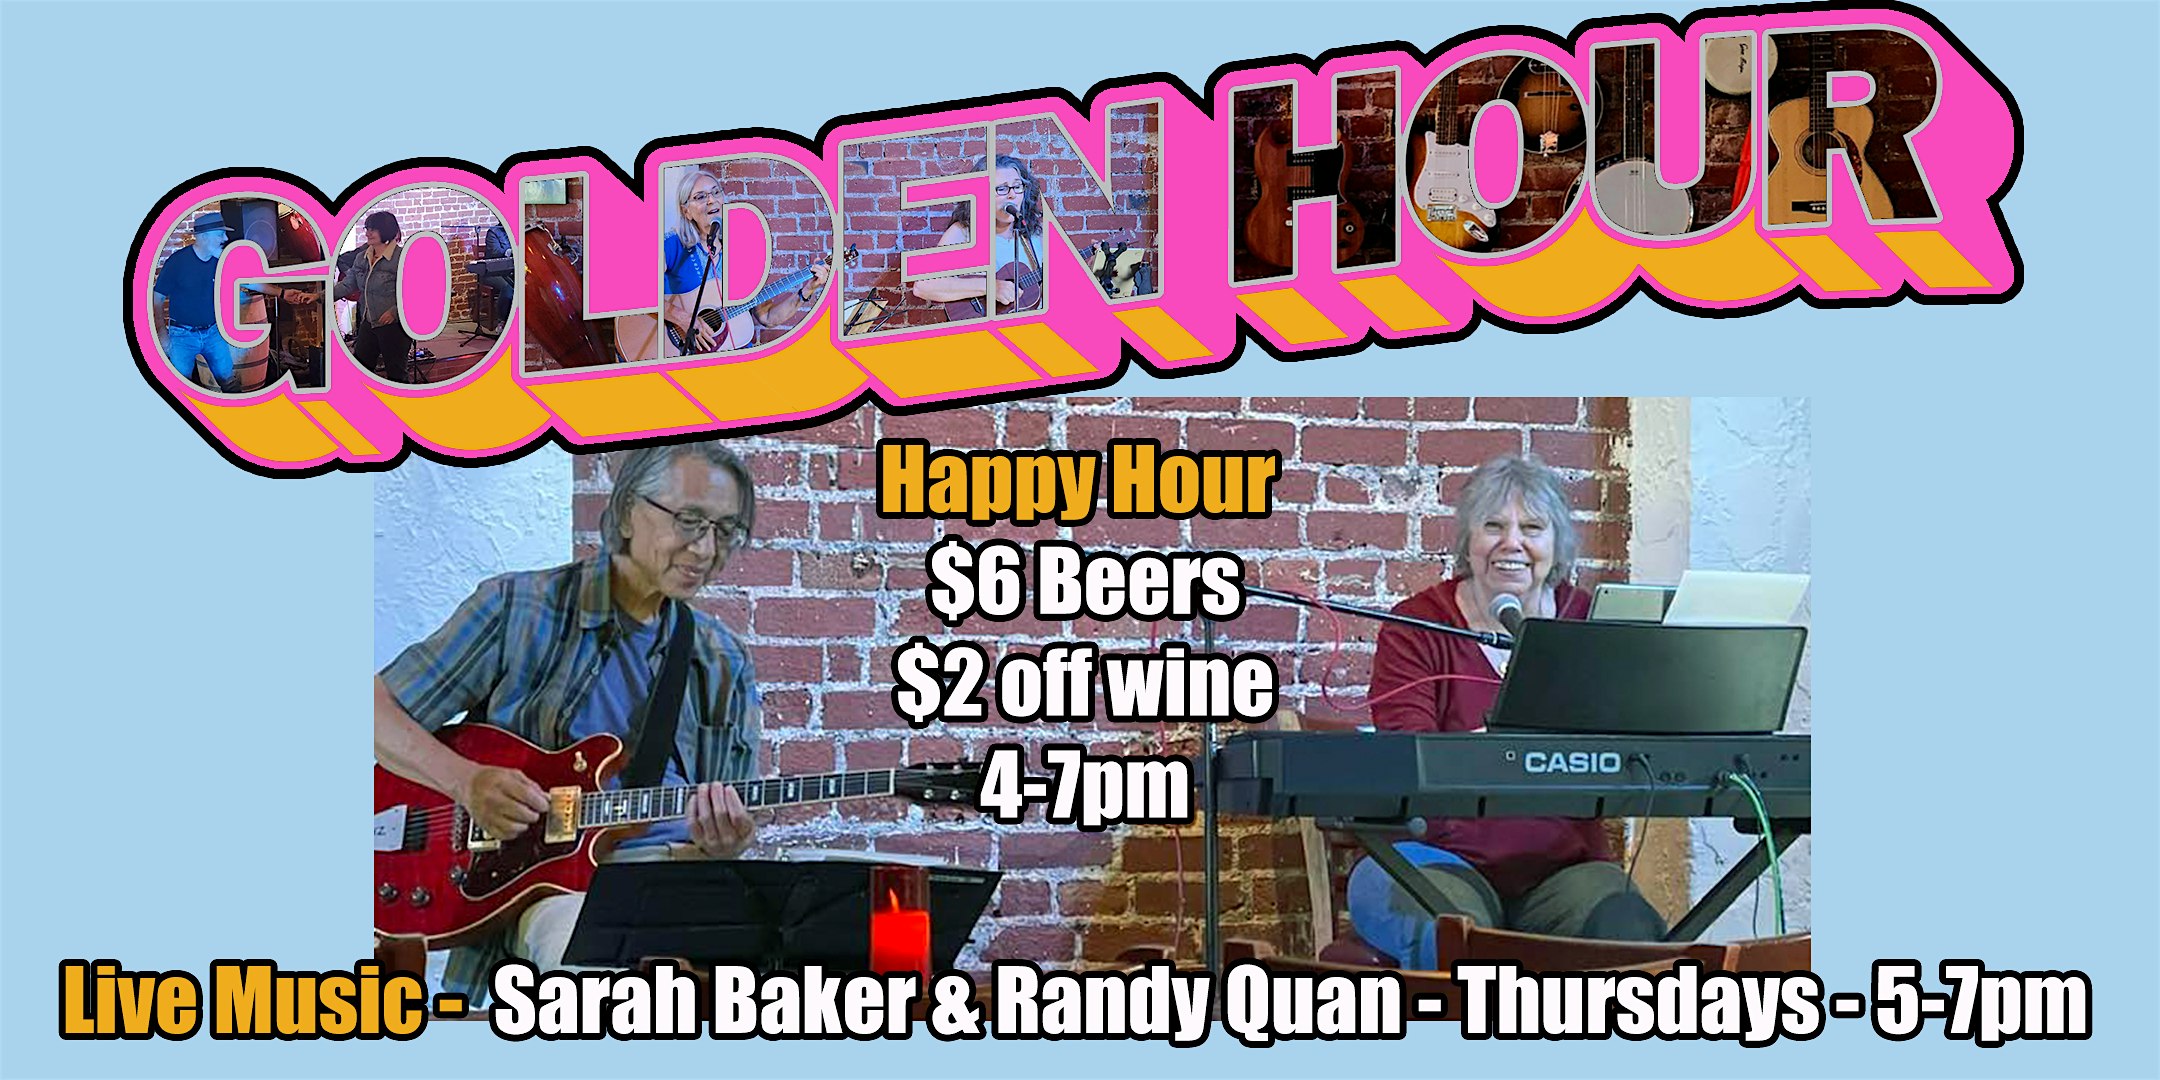 Bluesy Happy Hour with Sarah Baker, Randy Quan, & Friends - Every Thursday!